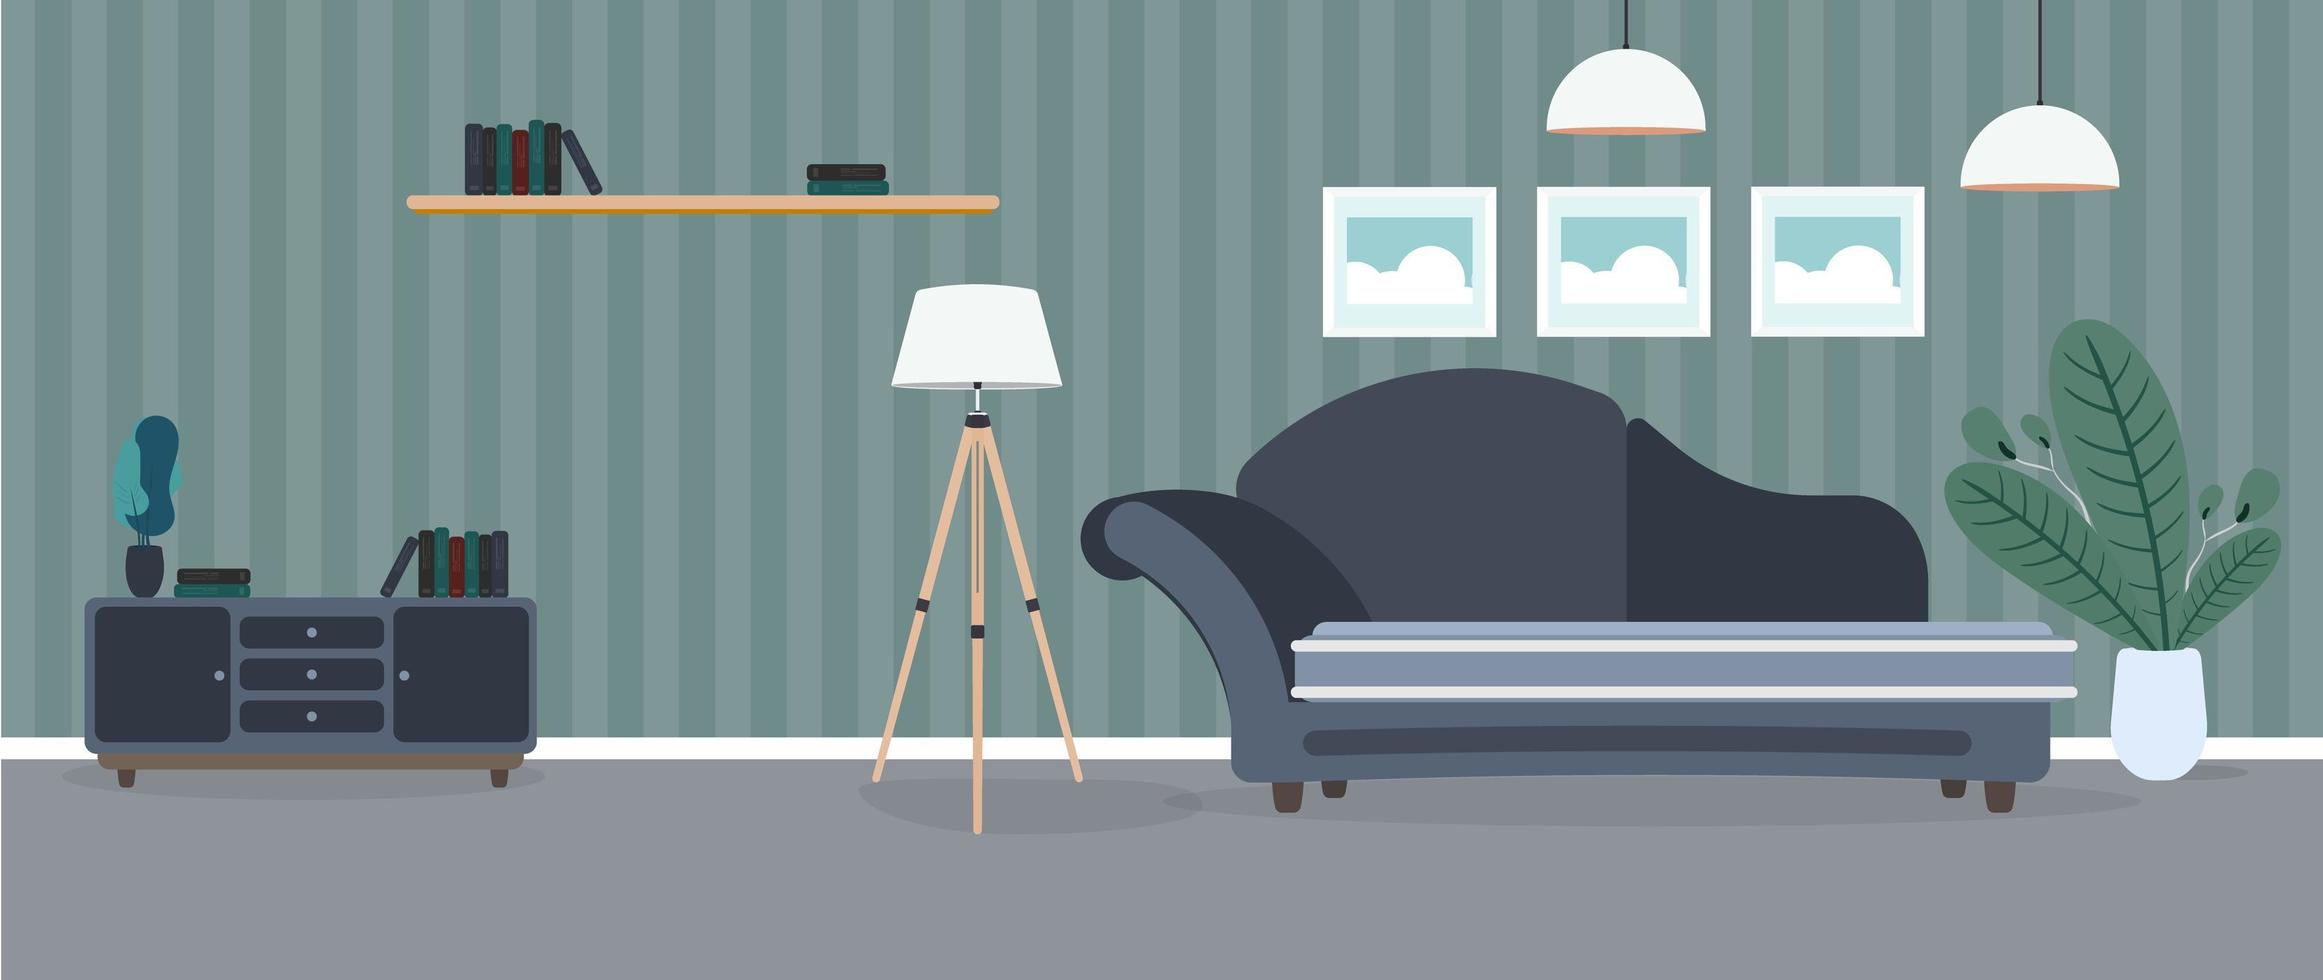 habitación moderna. Living comedor con sofá, placard, lámpara, cuadros. muebles. interior. vector. vector